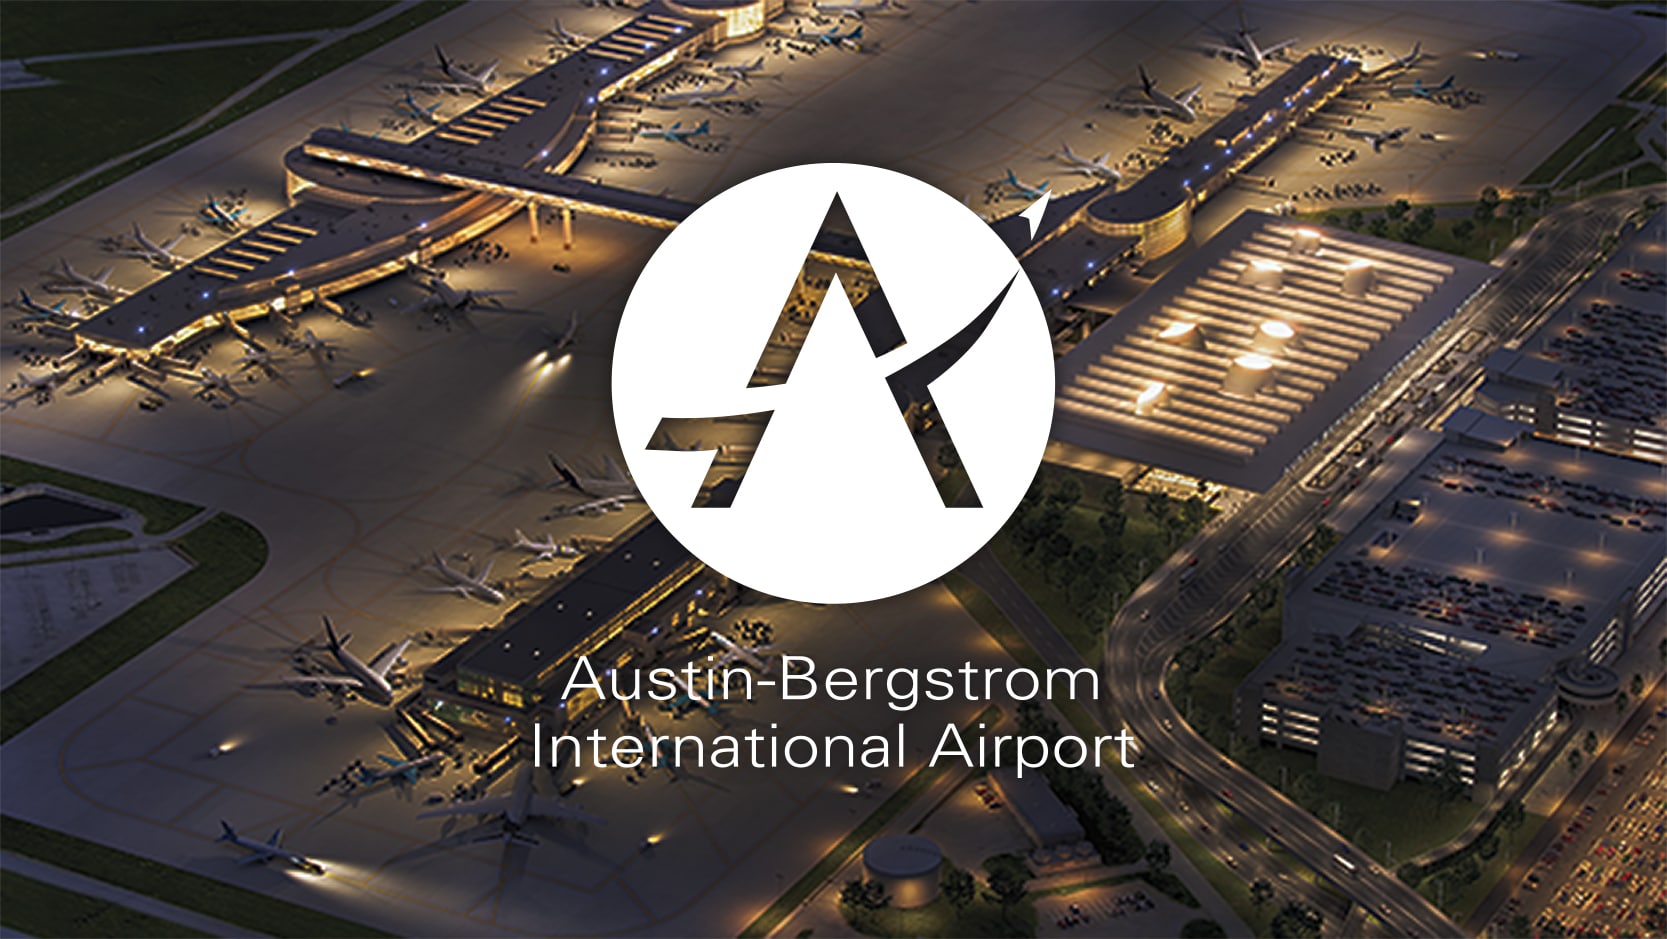  Austin-Bergstrom International Airport